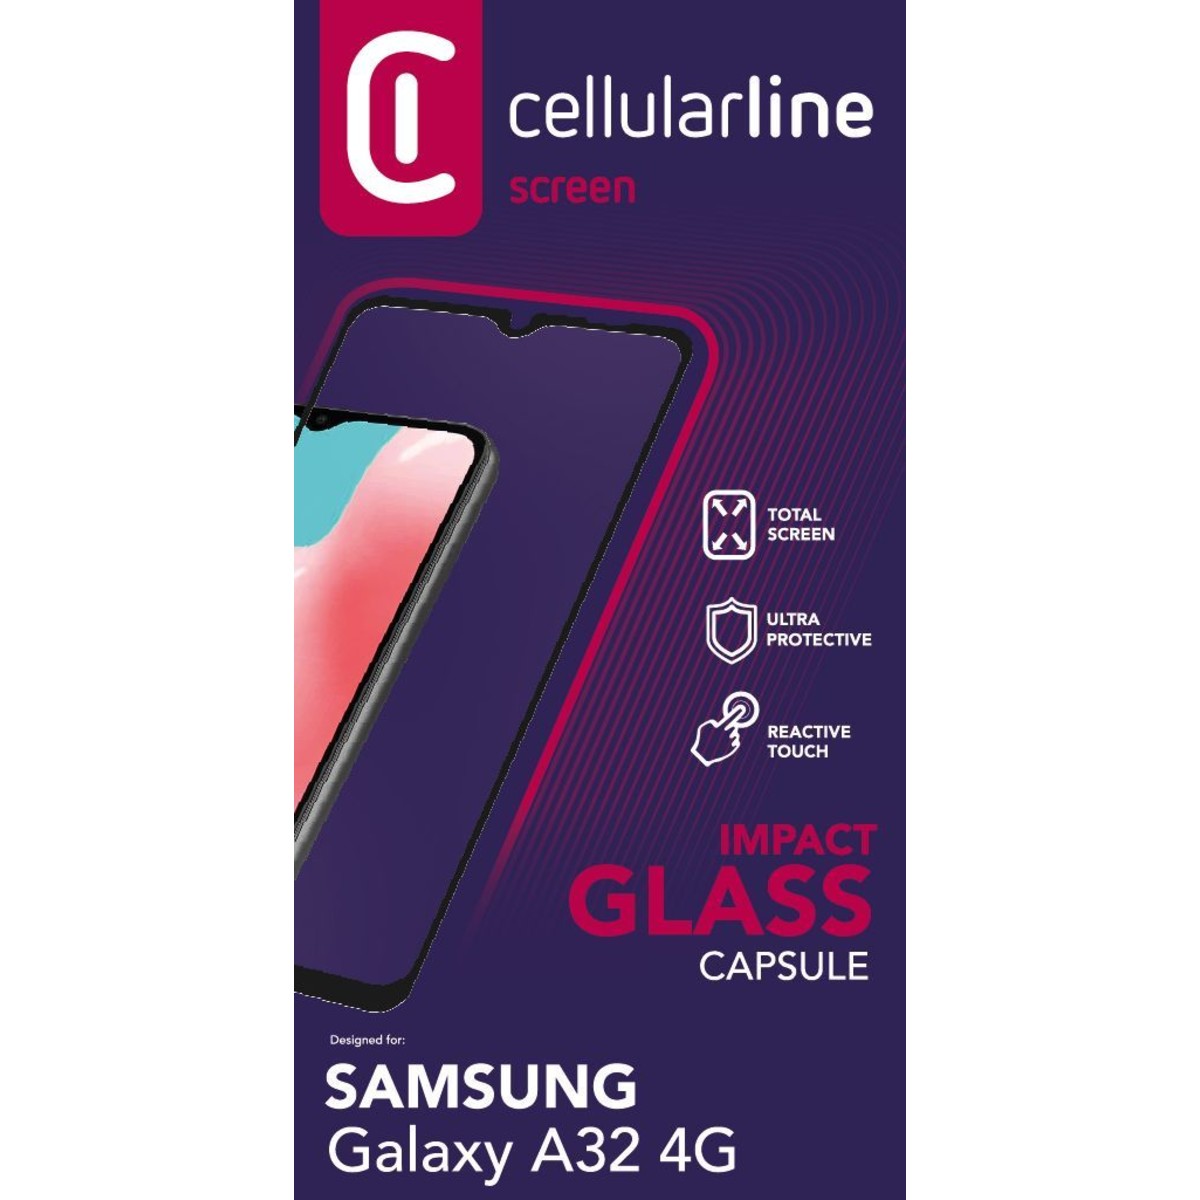 Schutzglas IMPACT GLASS CAPSULE für Samsung Galaxy A32 4G